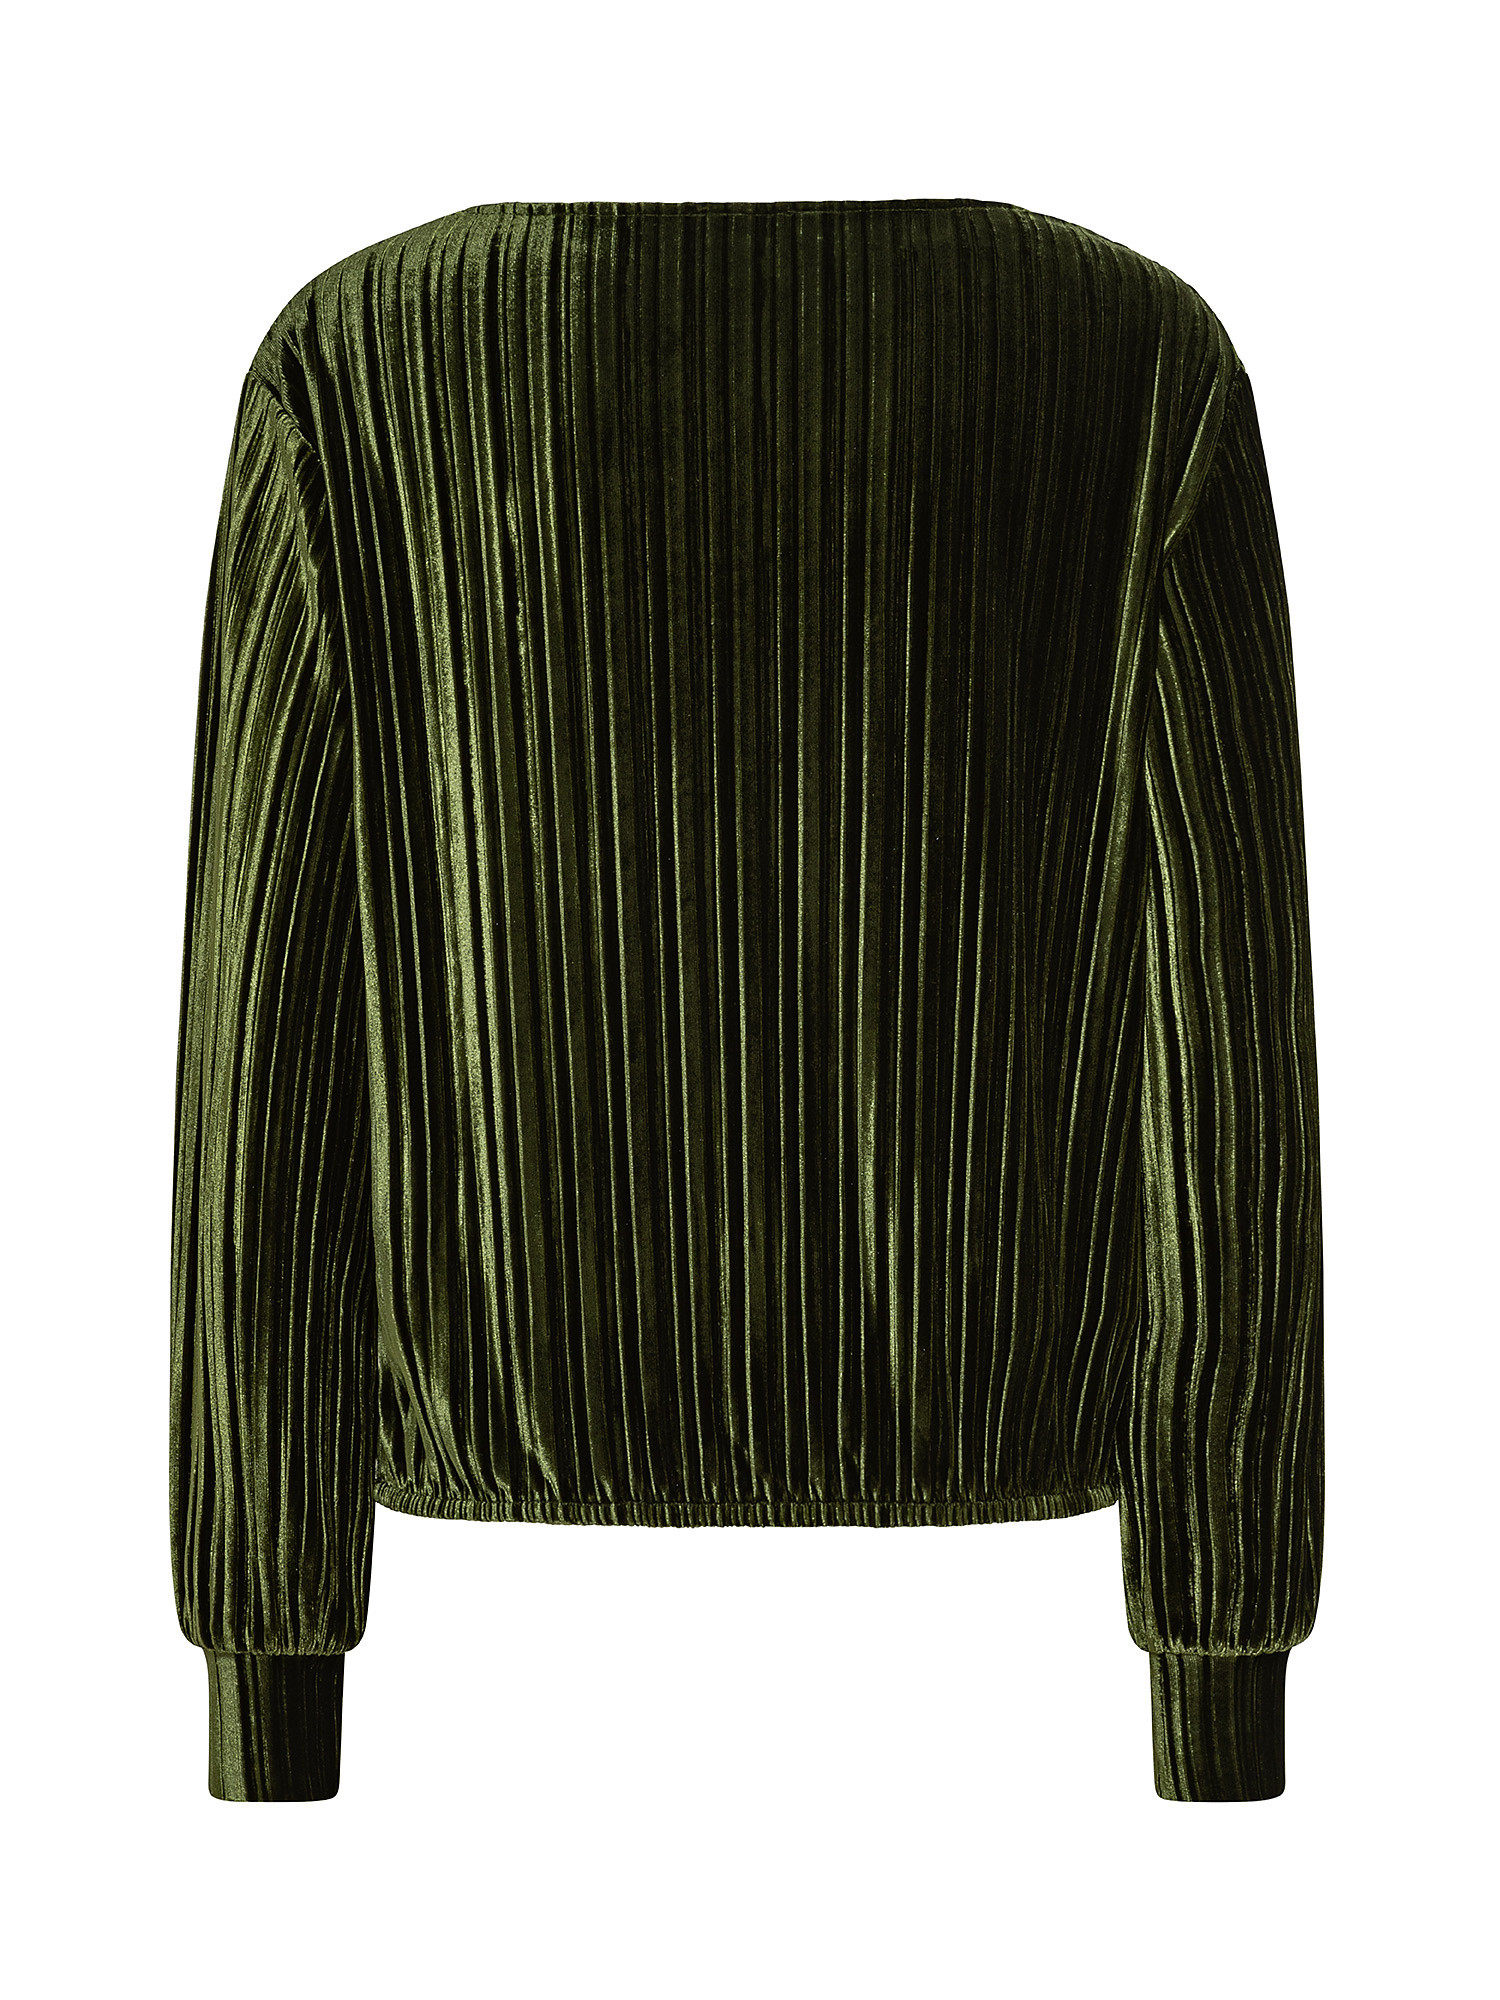 T-shirt in velour plissé, Verde, large image number 1